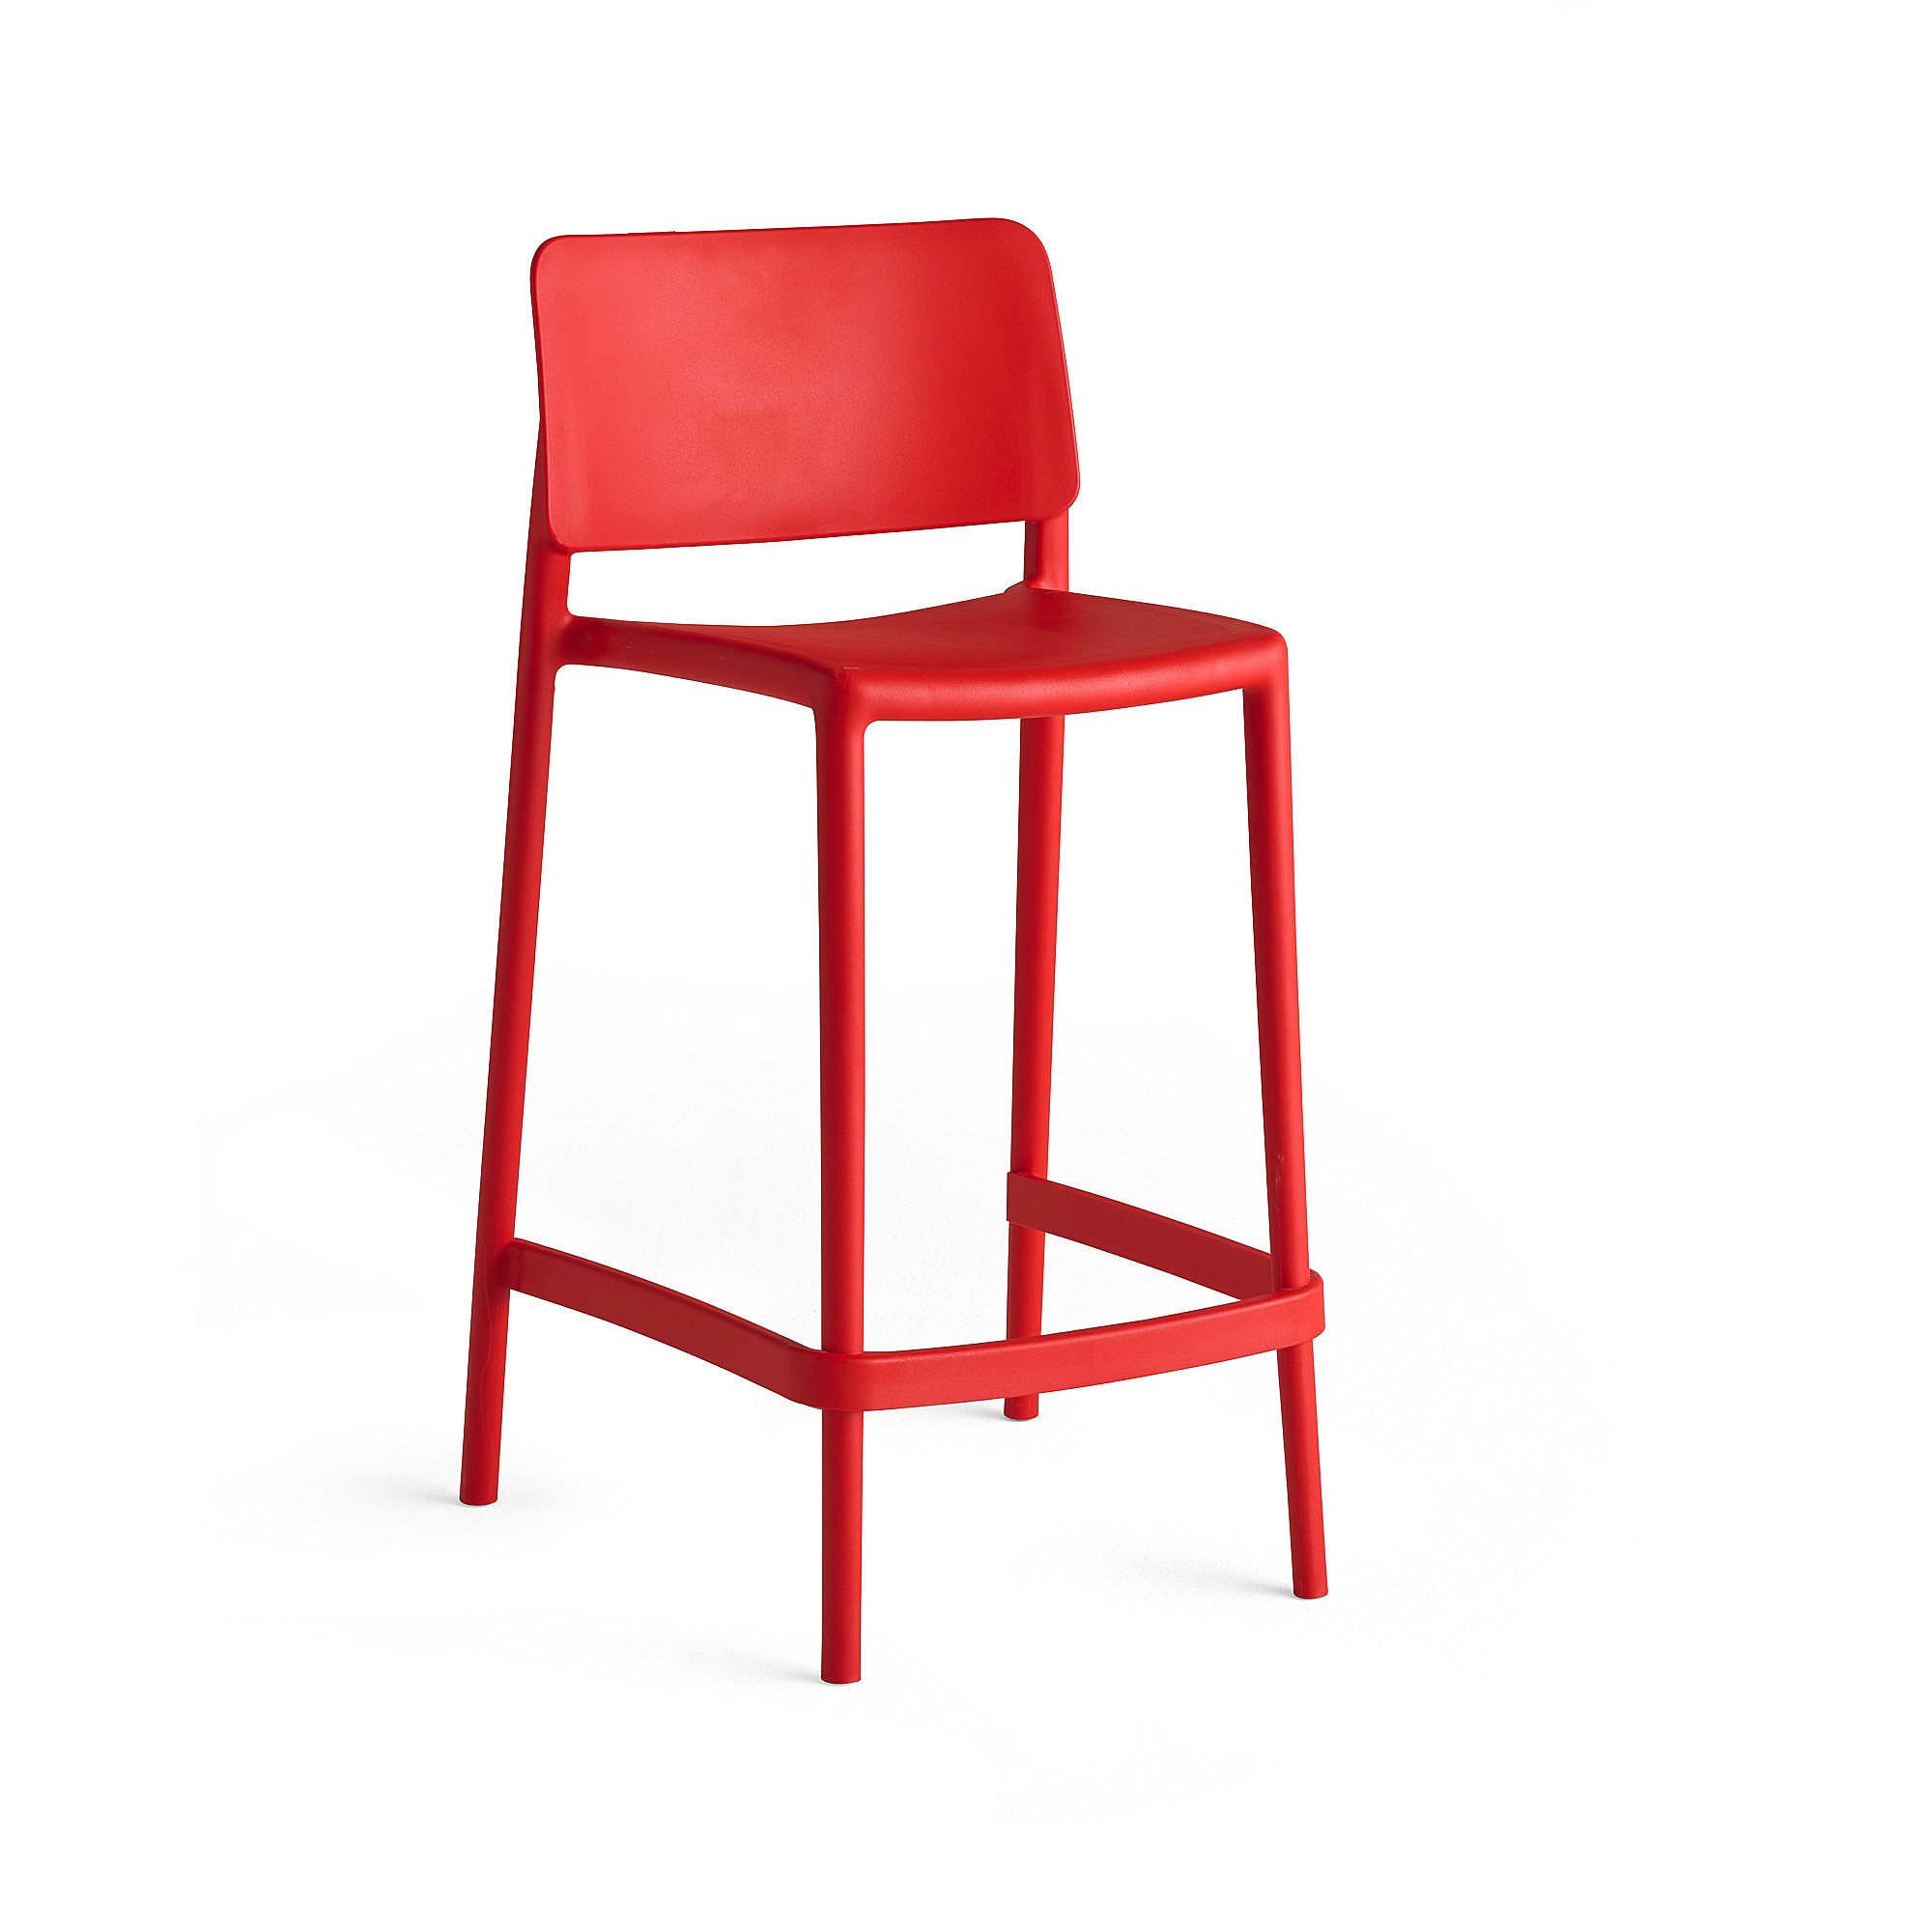 E-shop Barová stolička RIO, výška sedáku 650 mm, červená